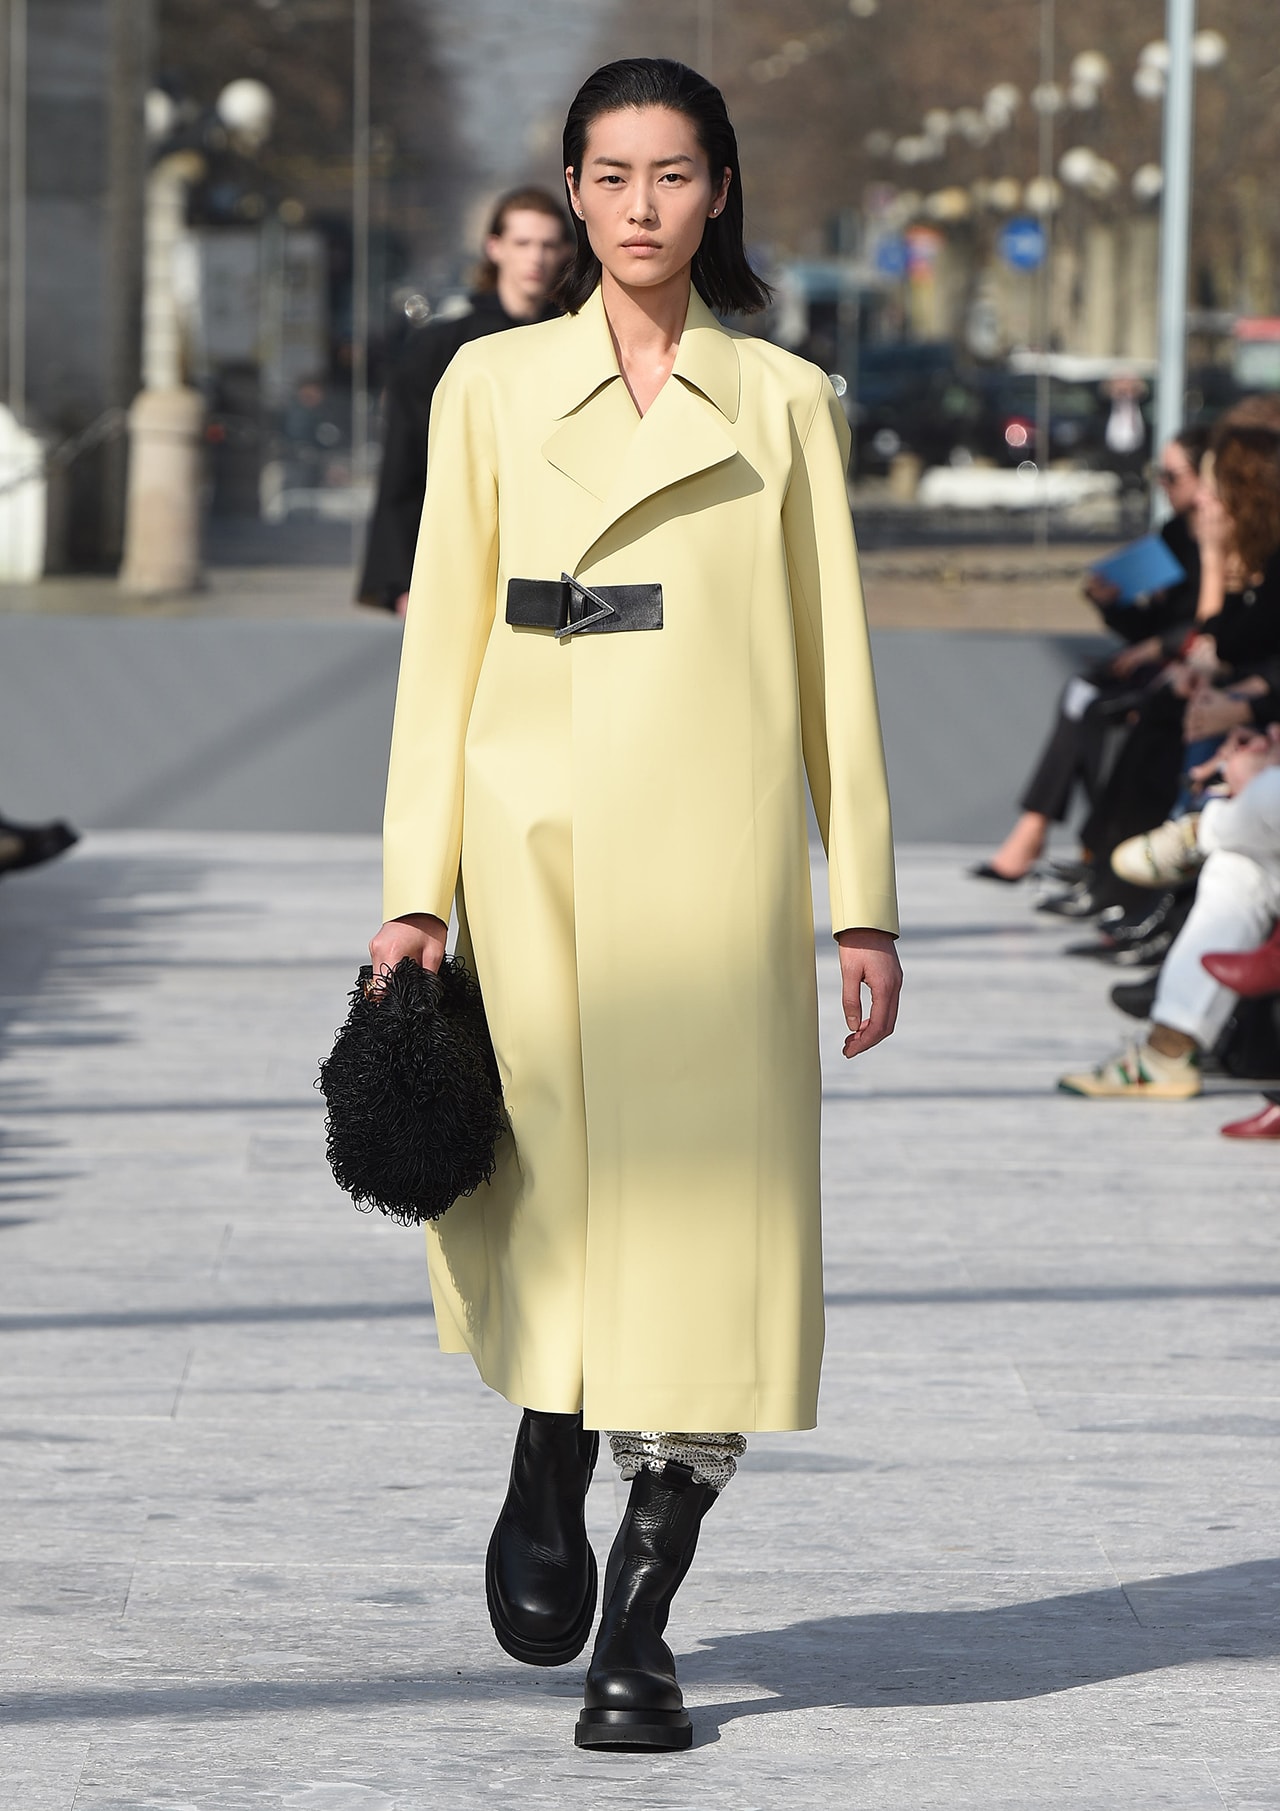 Bottega Veneta Milan Fashion Week Fall Winter 2019 FW19 Daniel Lee Debut Runway Show yellow pastel coat